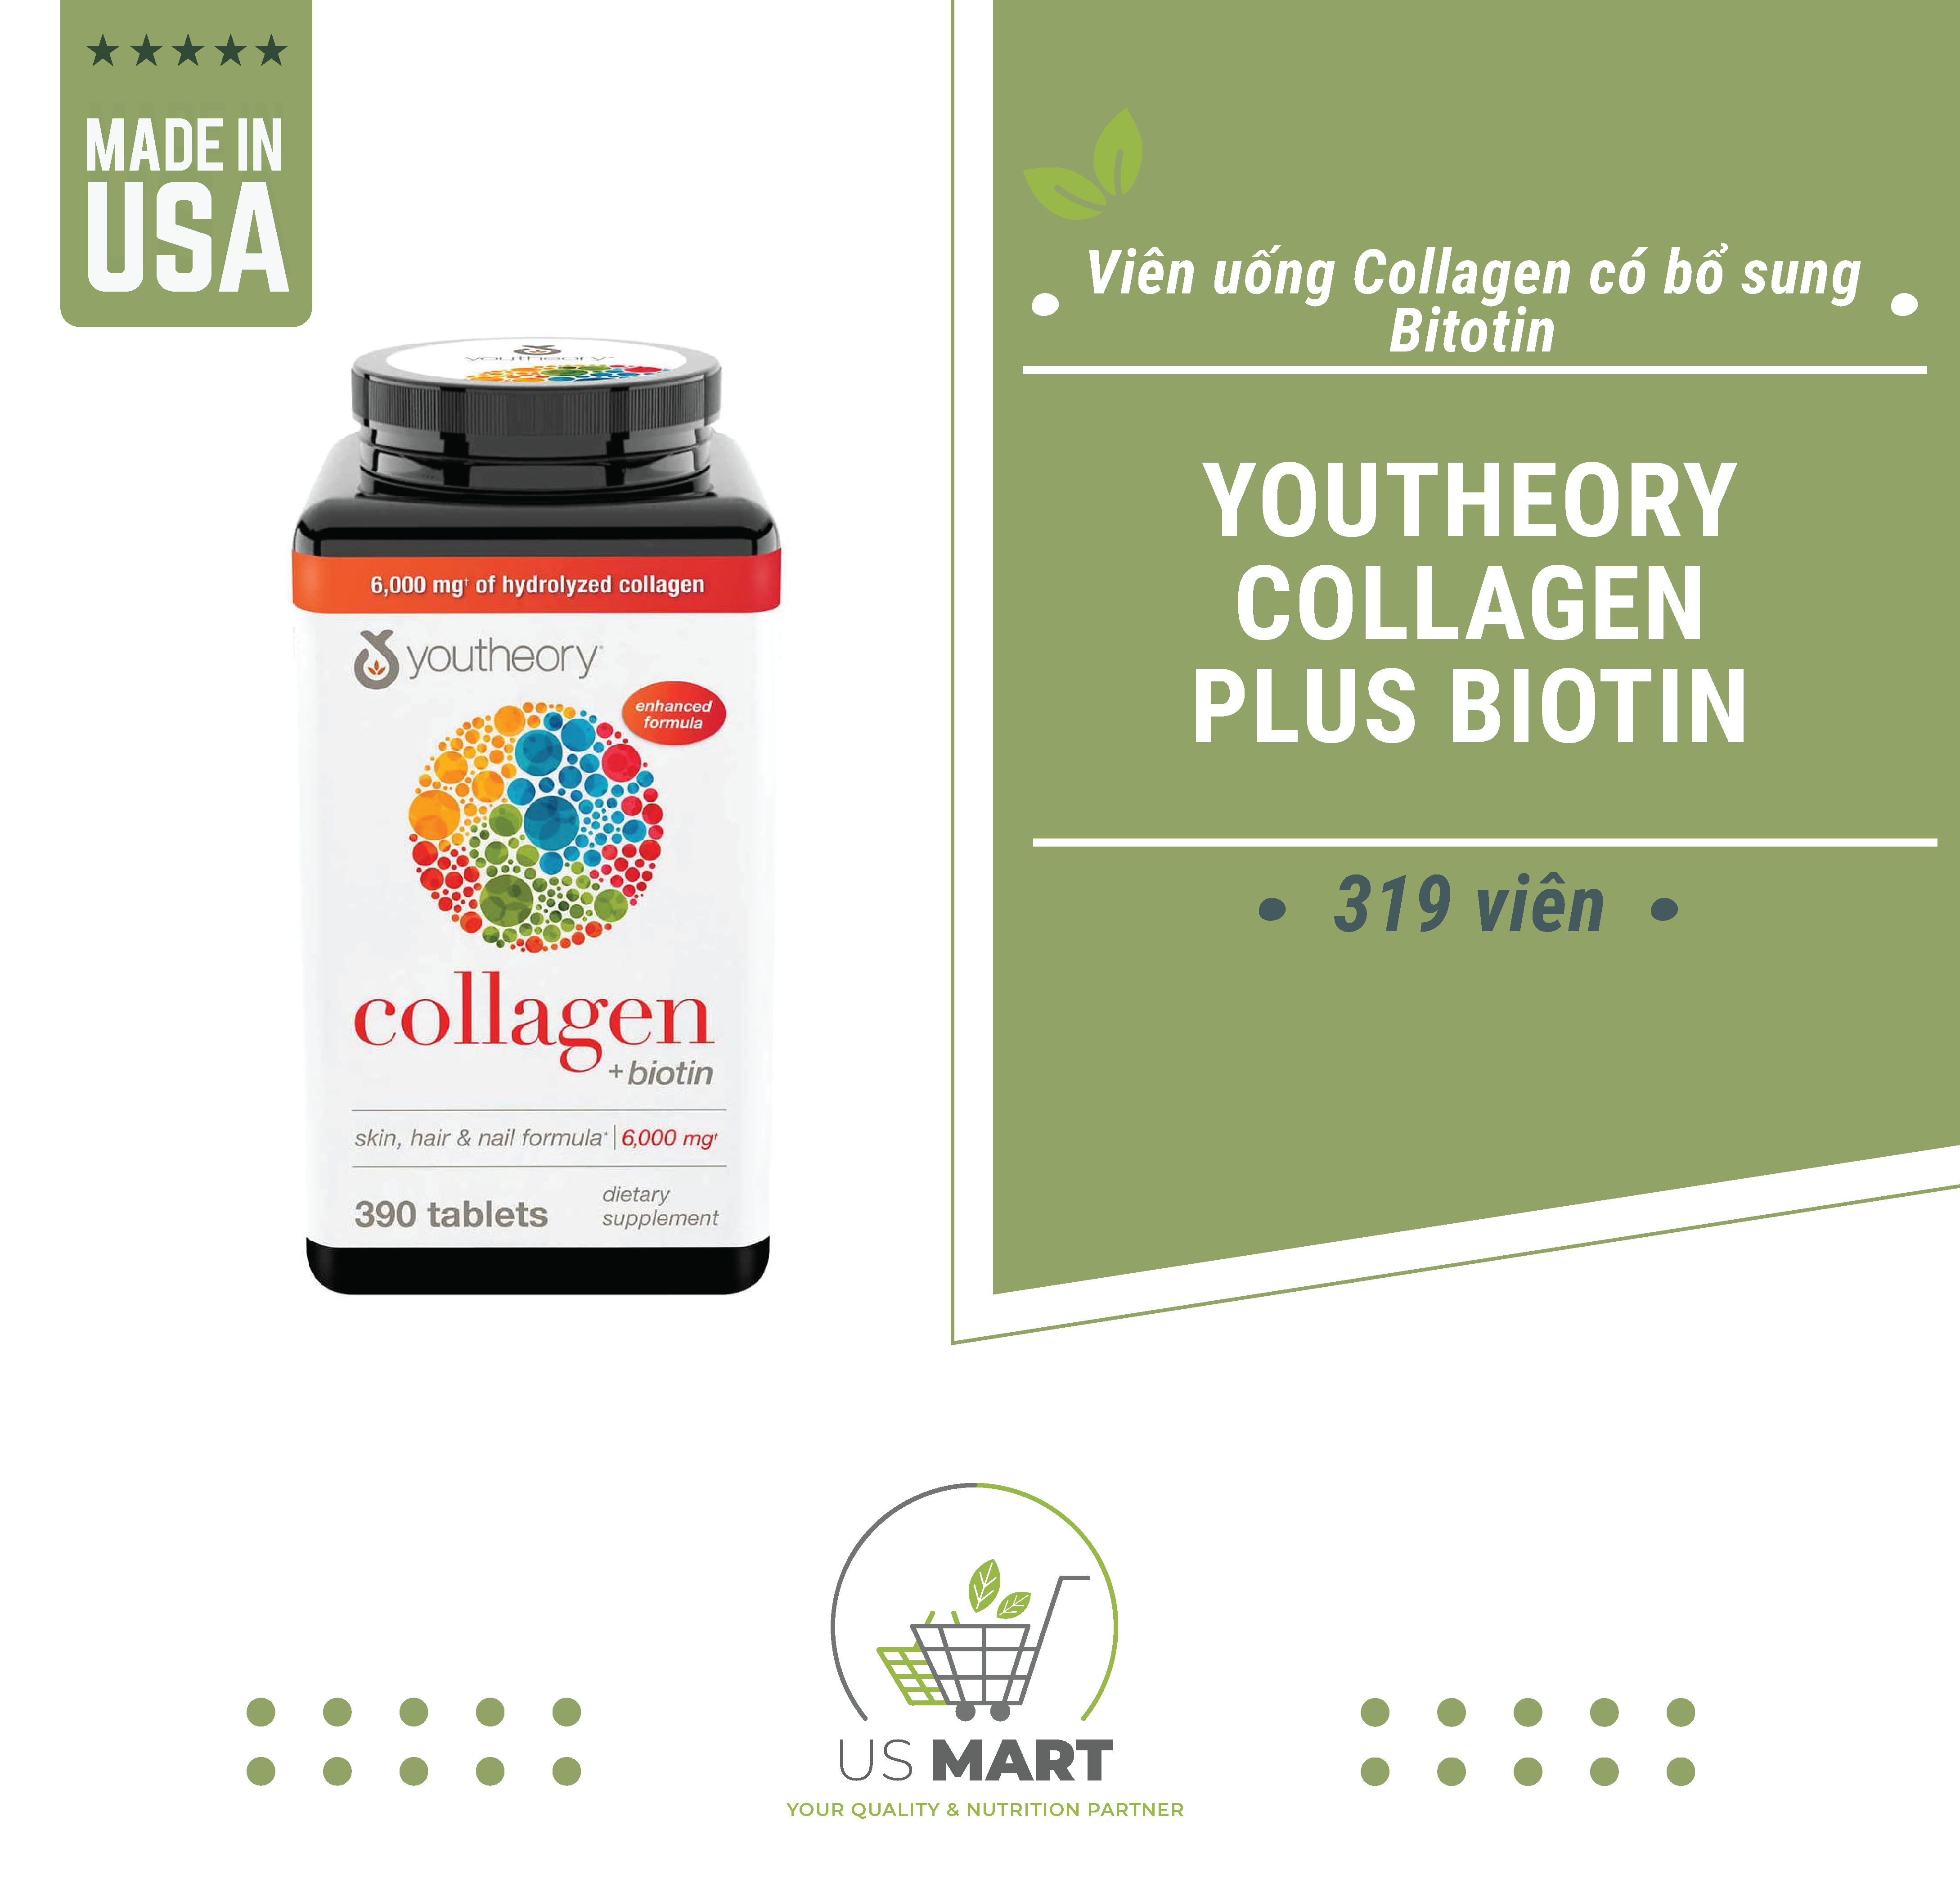 HCMViên uống Collagen có bổ sung Biotin - Youtheory Collagen Plus Bitotin